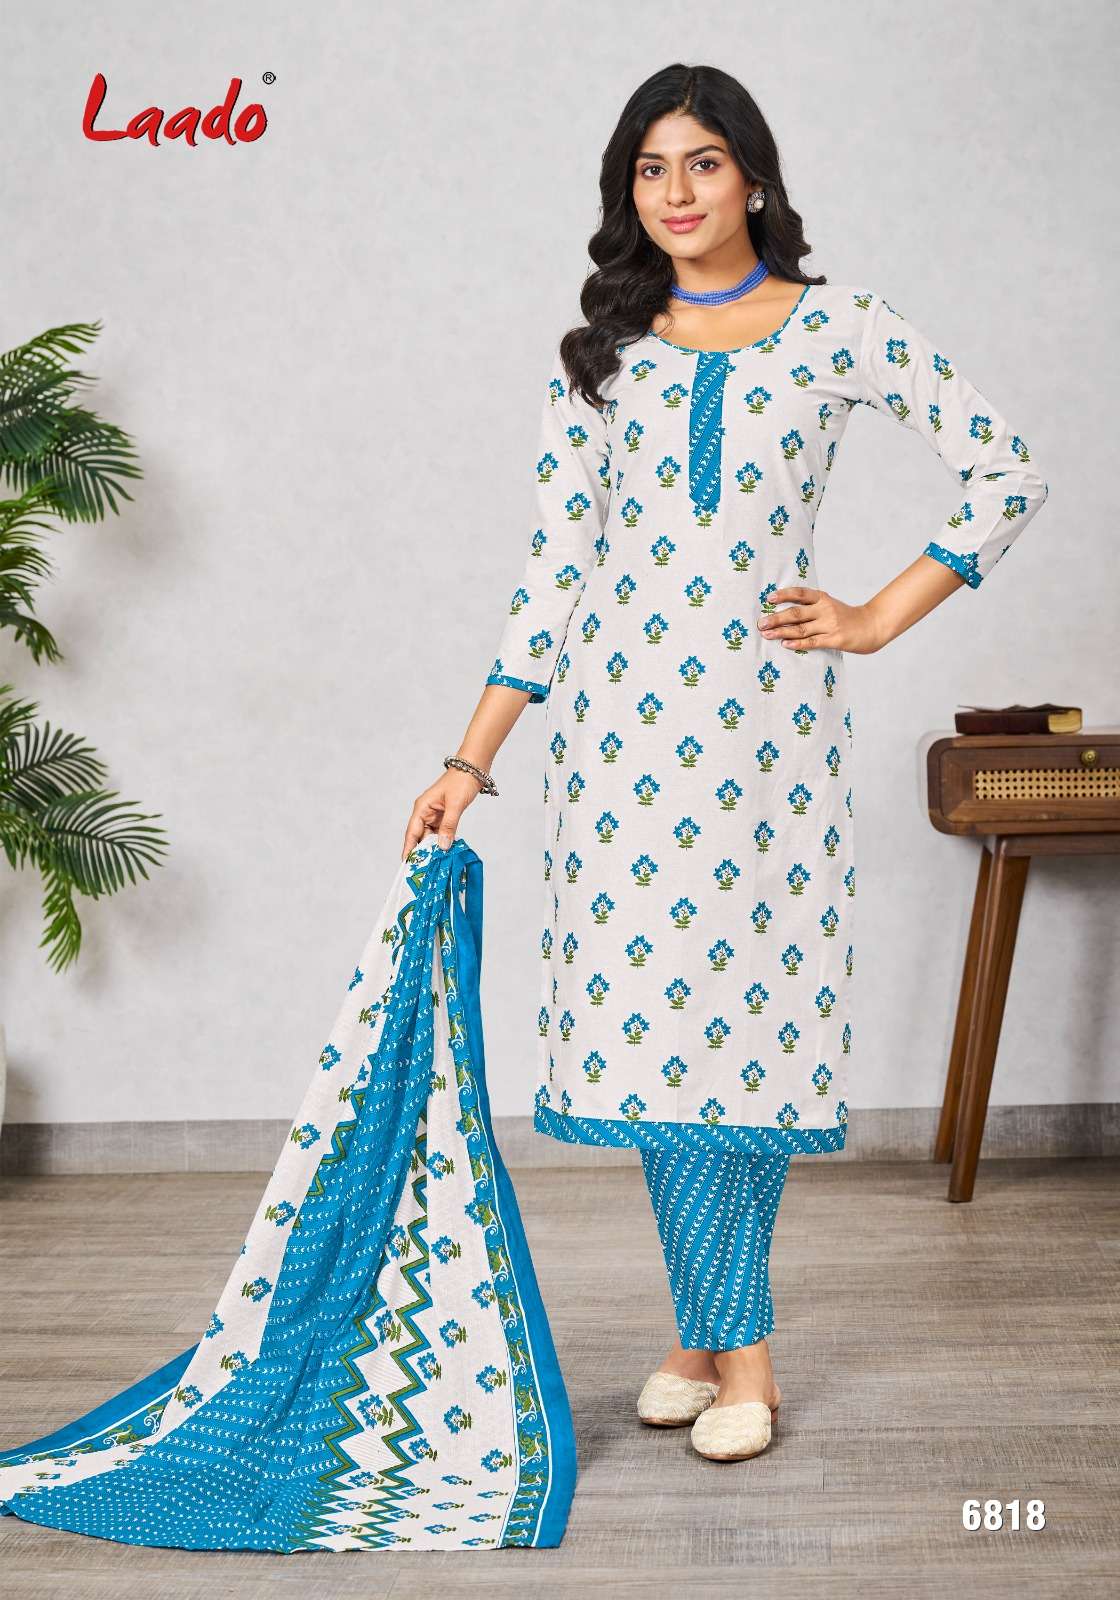 laado vol-68 6801-6820 series pure cotton designer salwar suits dress material catalogue online surat 